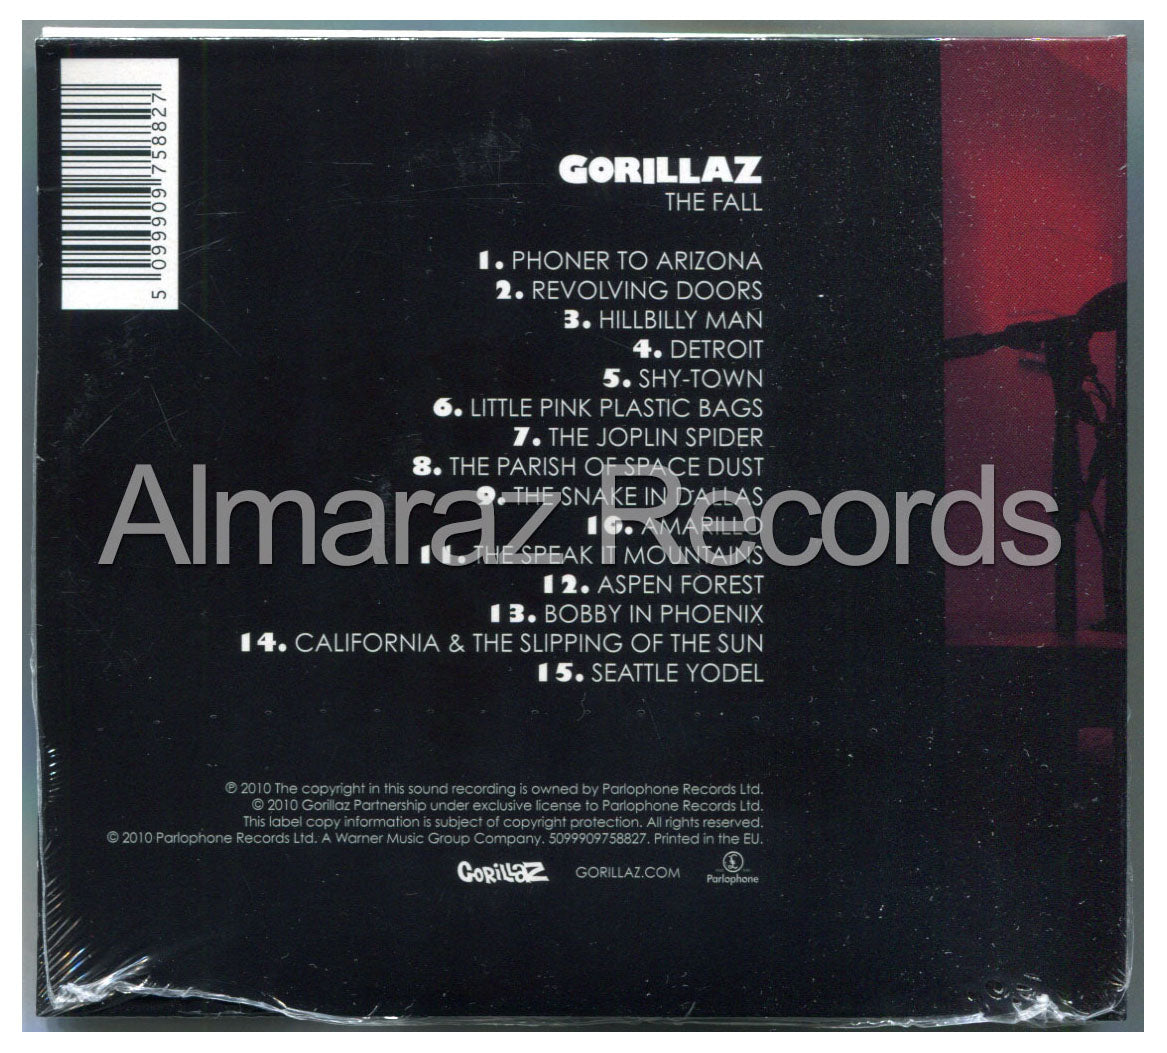 Gorillaz The Fall CD